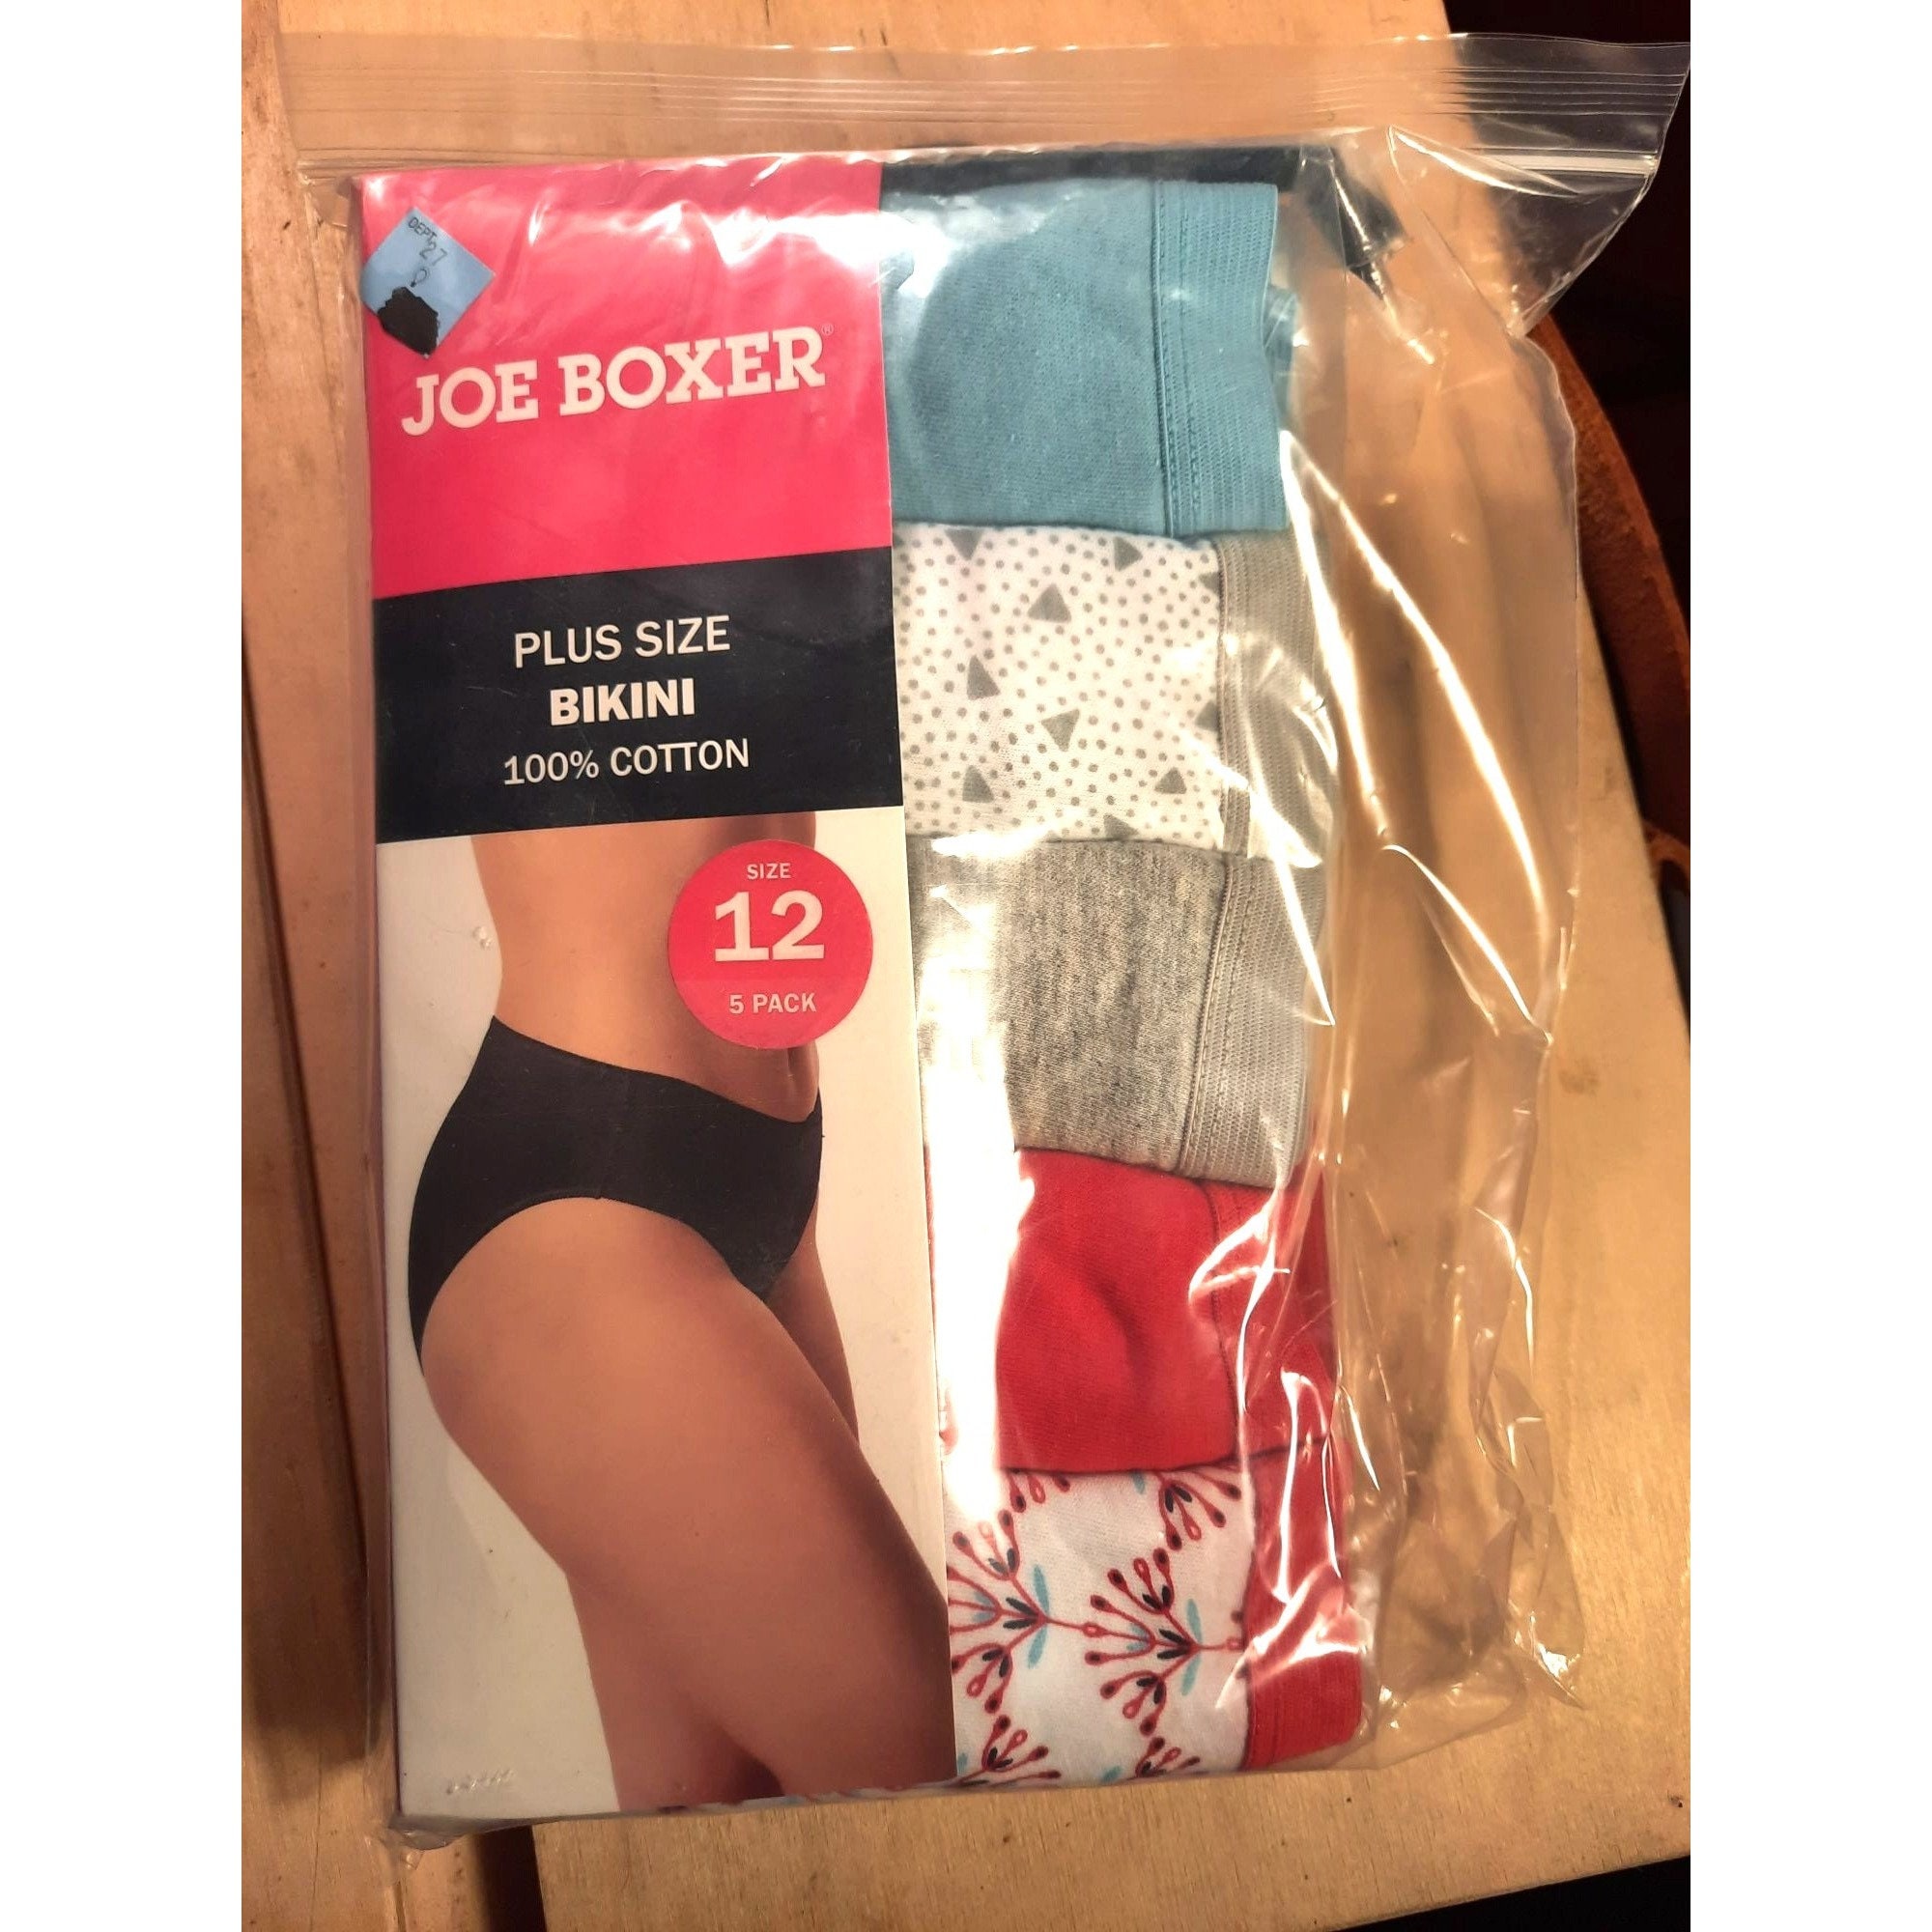 Plus Size Womens Underwear Joe Boxer Bikini Low Rise Panties Cotton 5 Pack  Size 12 -  Israel